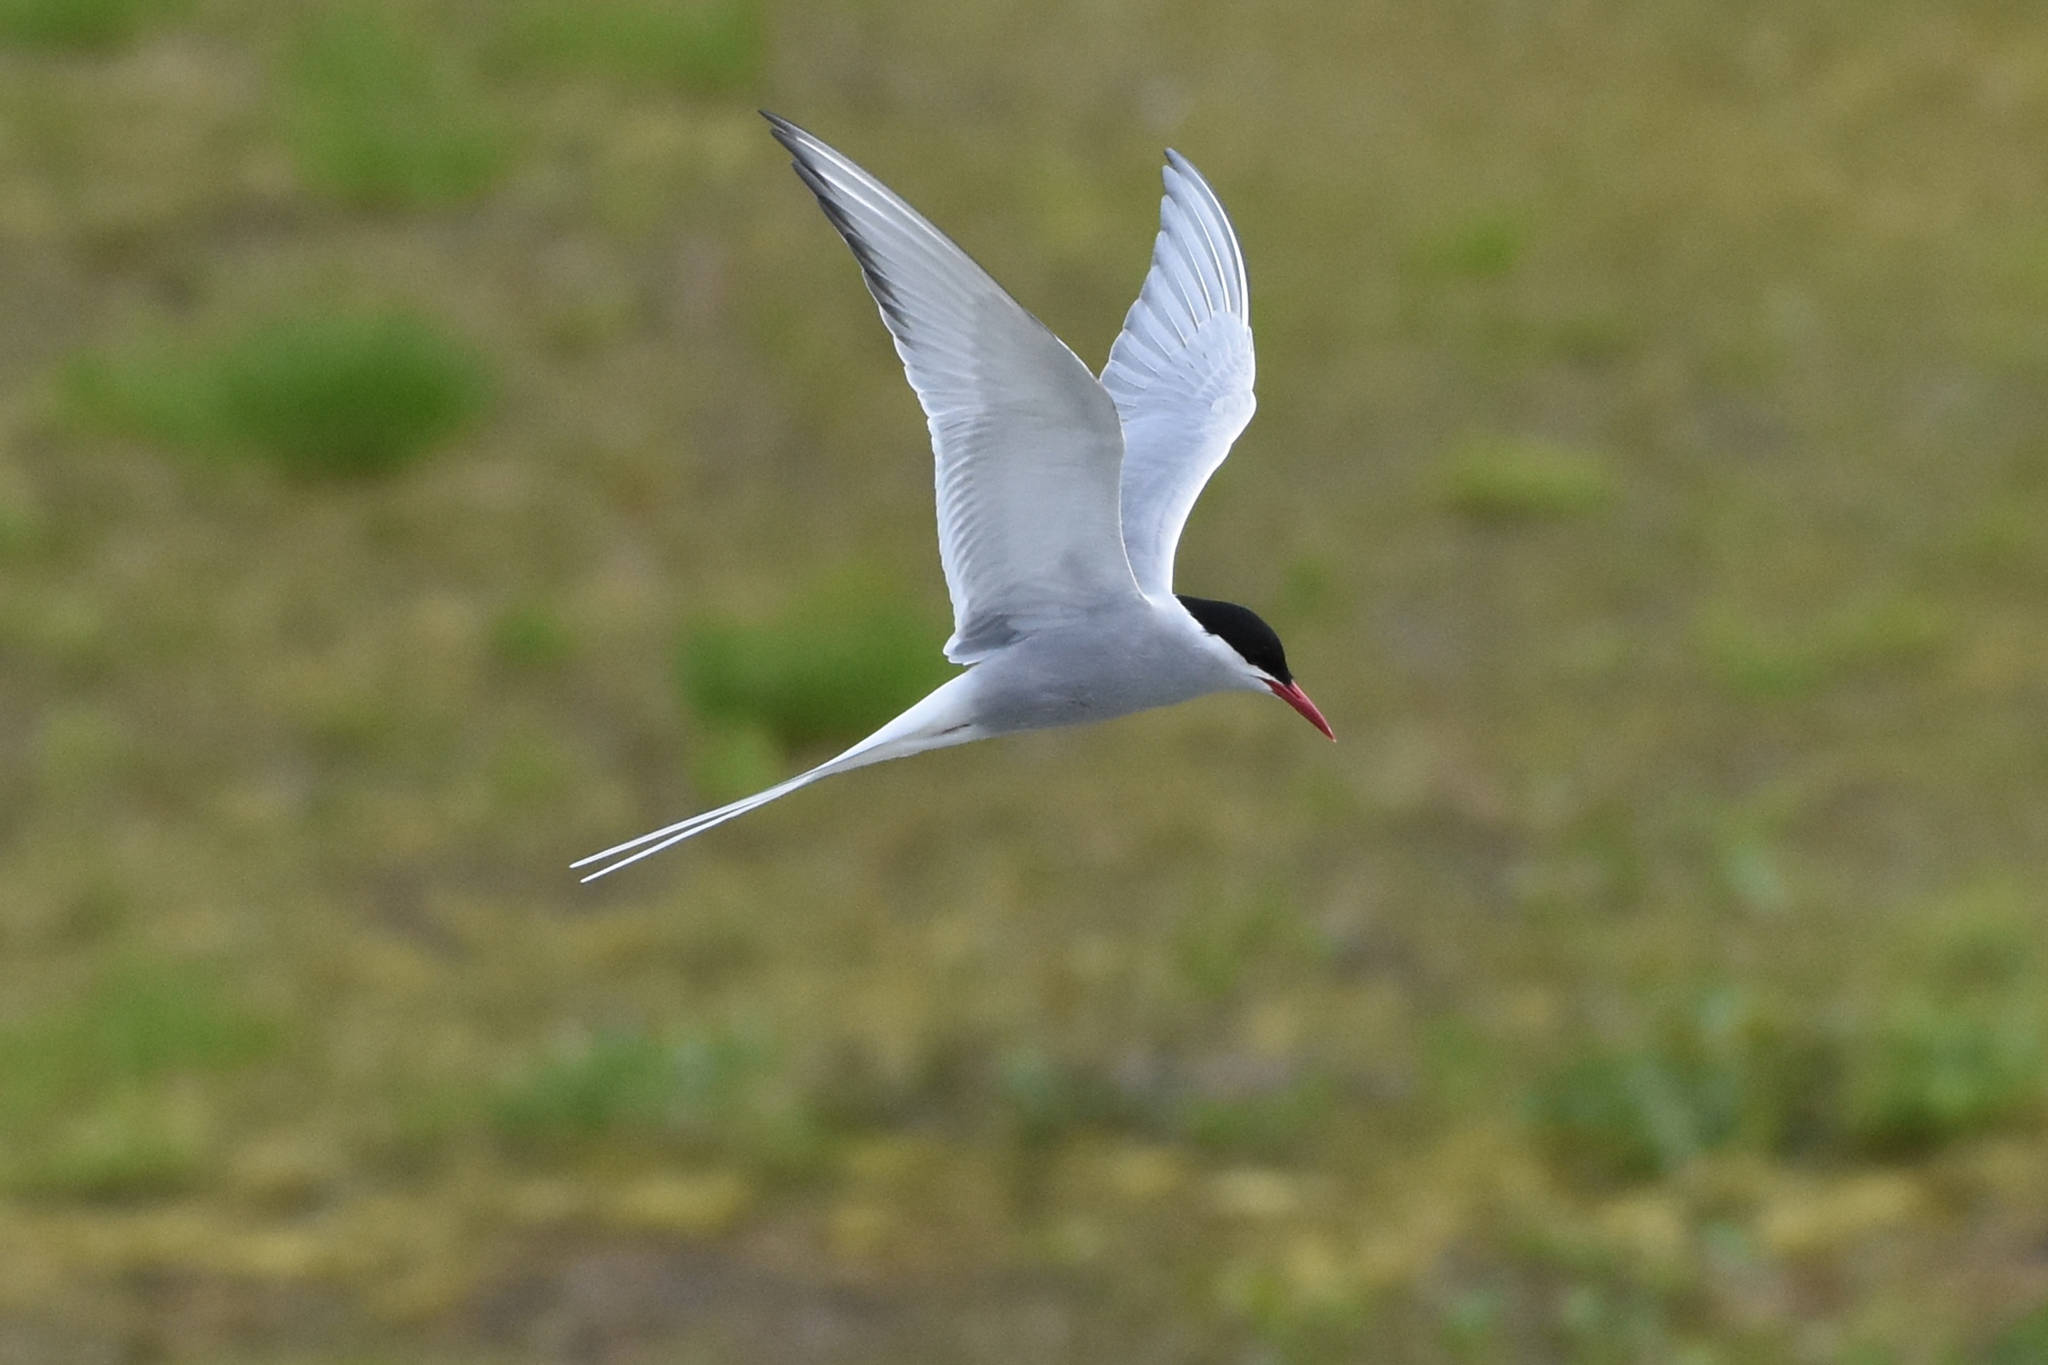 Arctic terns at Mendenhall seem to be decreasing in numbers